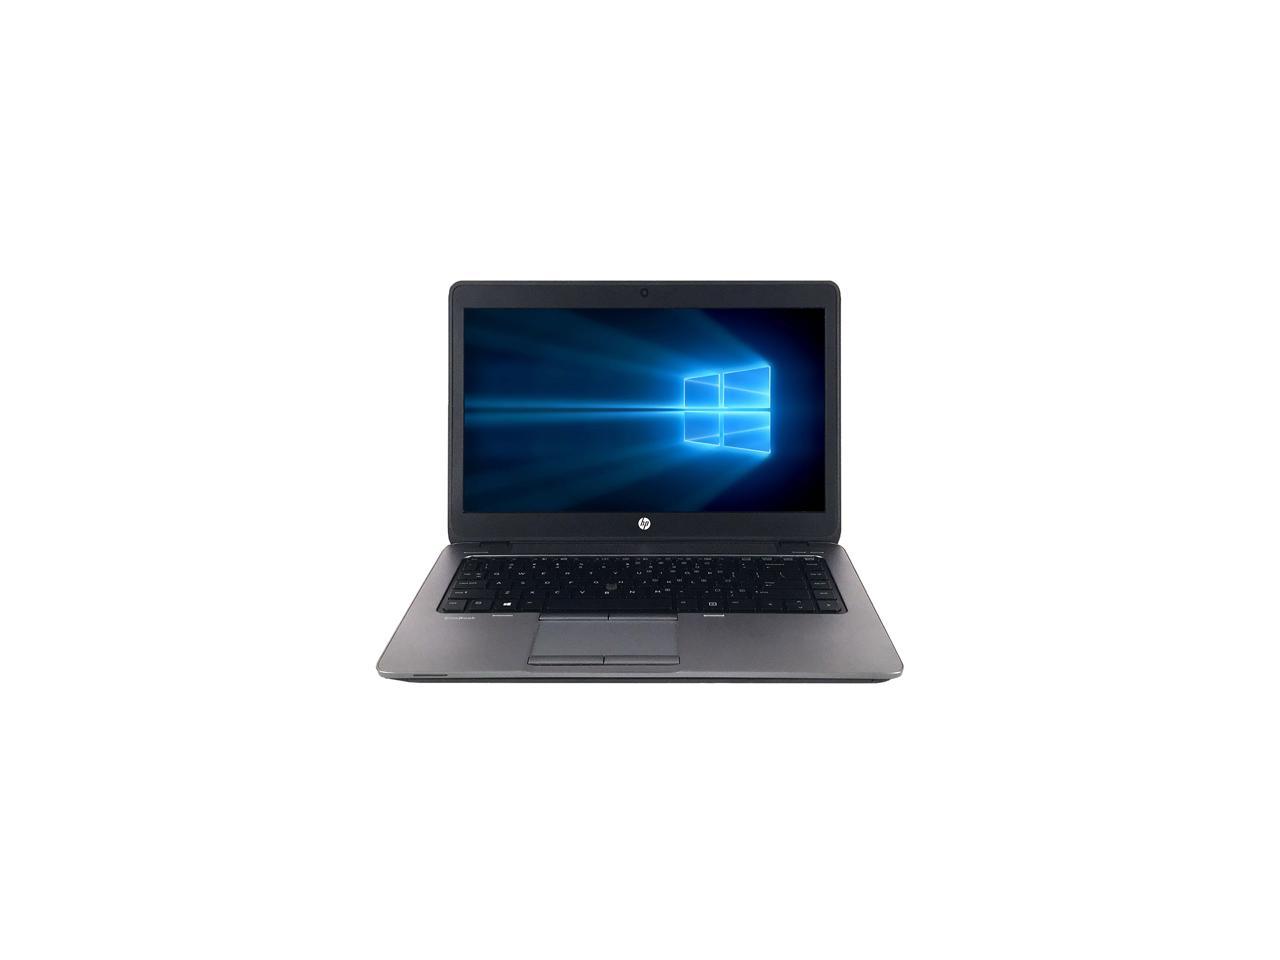 HP A Grade Laptop EliteBook 840 G2 Intel Core i5 5th Gen 5300U (2.30 GHz) 8 GB Memory 500 GB HDD Intel HD Graphics 5500 14.0" Windows 10 Pro 64-Bit (Multi-Language Support English / Spanish)